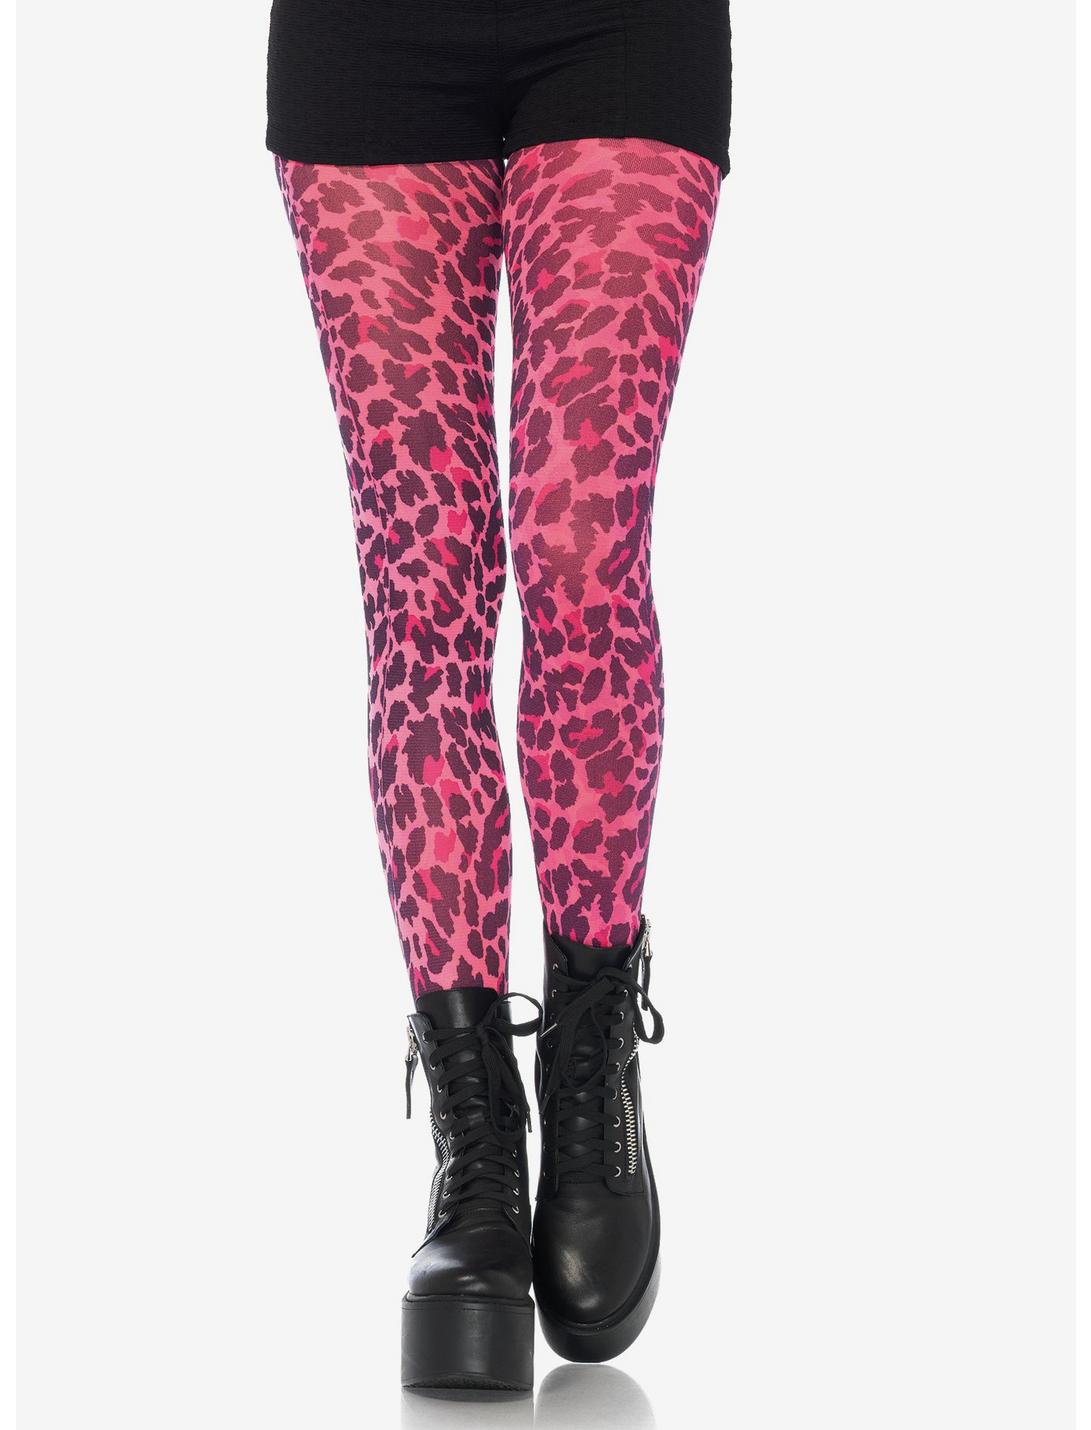 Neon Leopard Opaque Tights, , hi-res